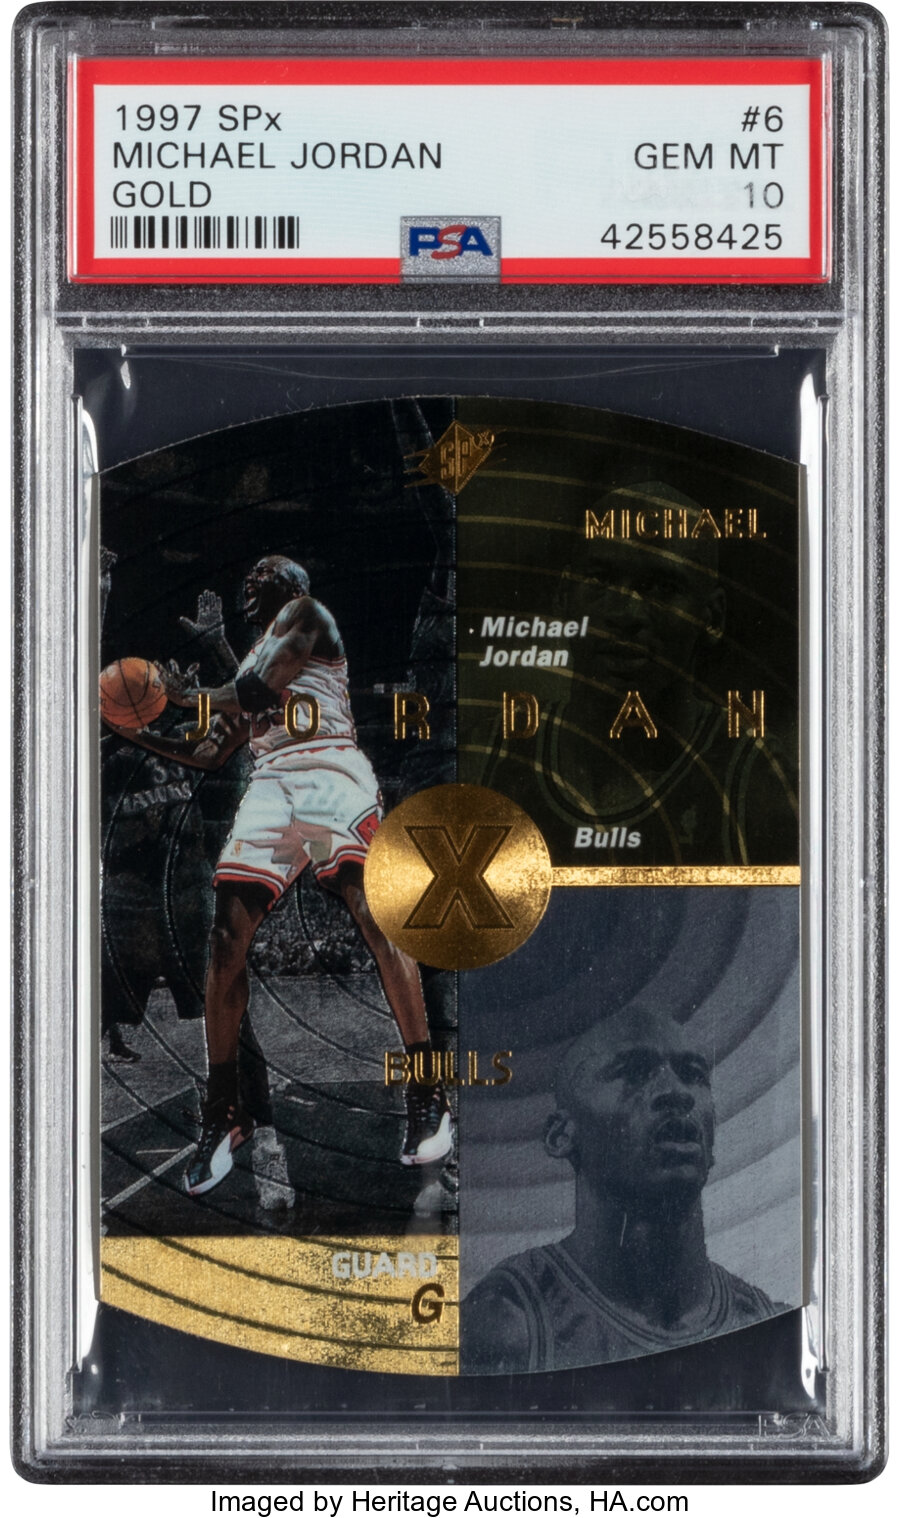 1997 SPx Gold Michael Jordan #6 PSA Gem Mint 10